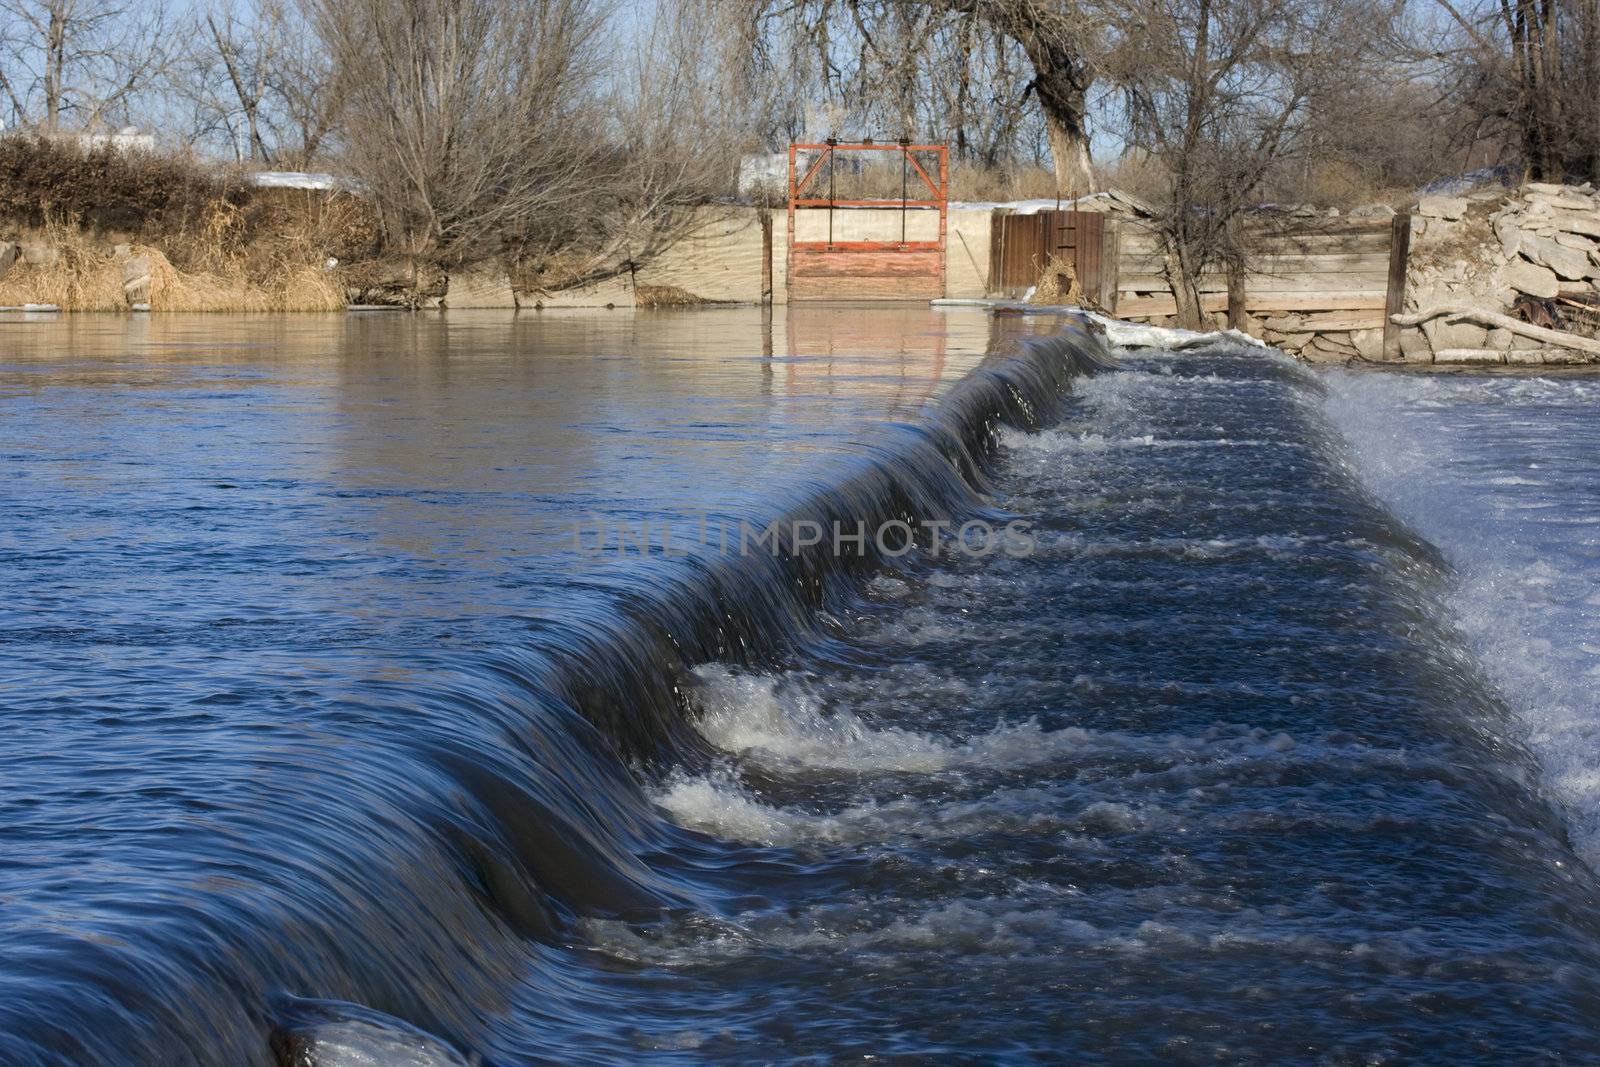 diversion dam on a river by PixelsAway